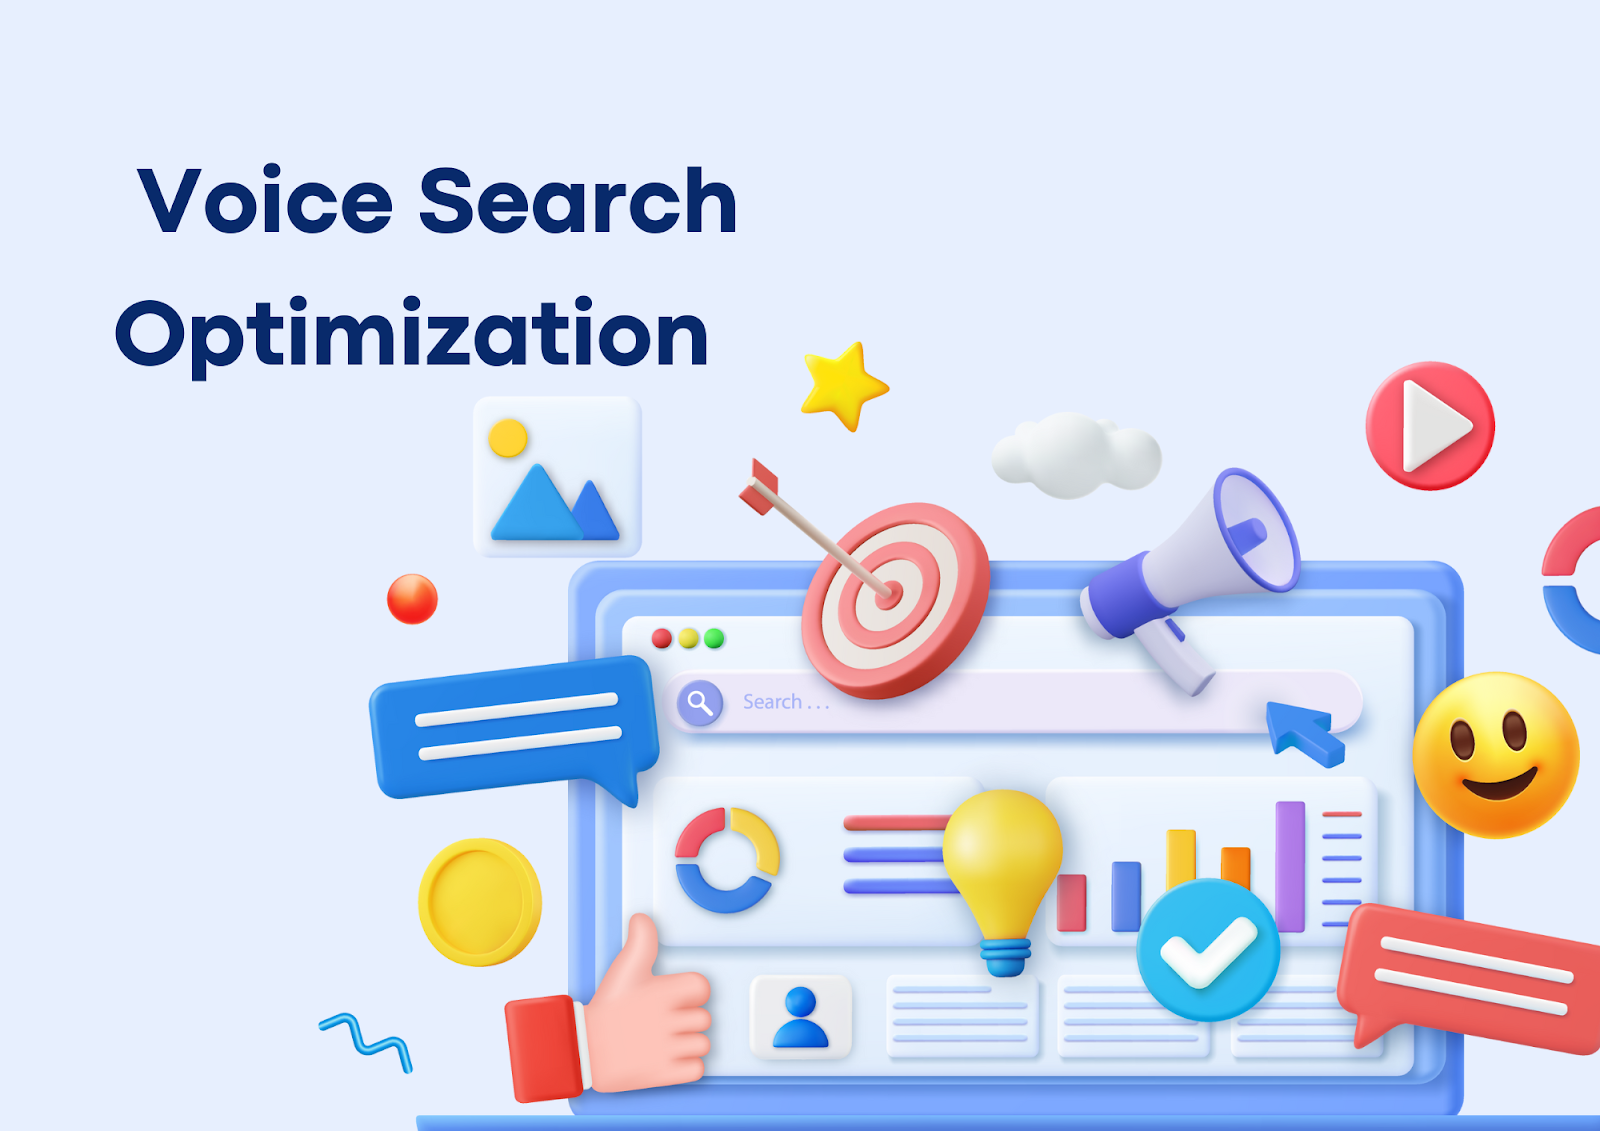 Voice Search Optimization
